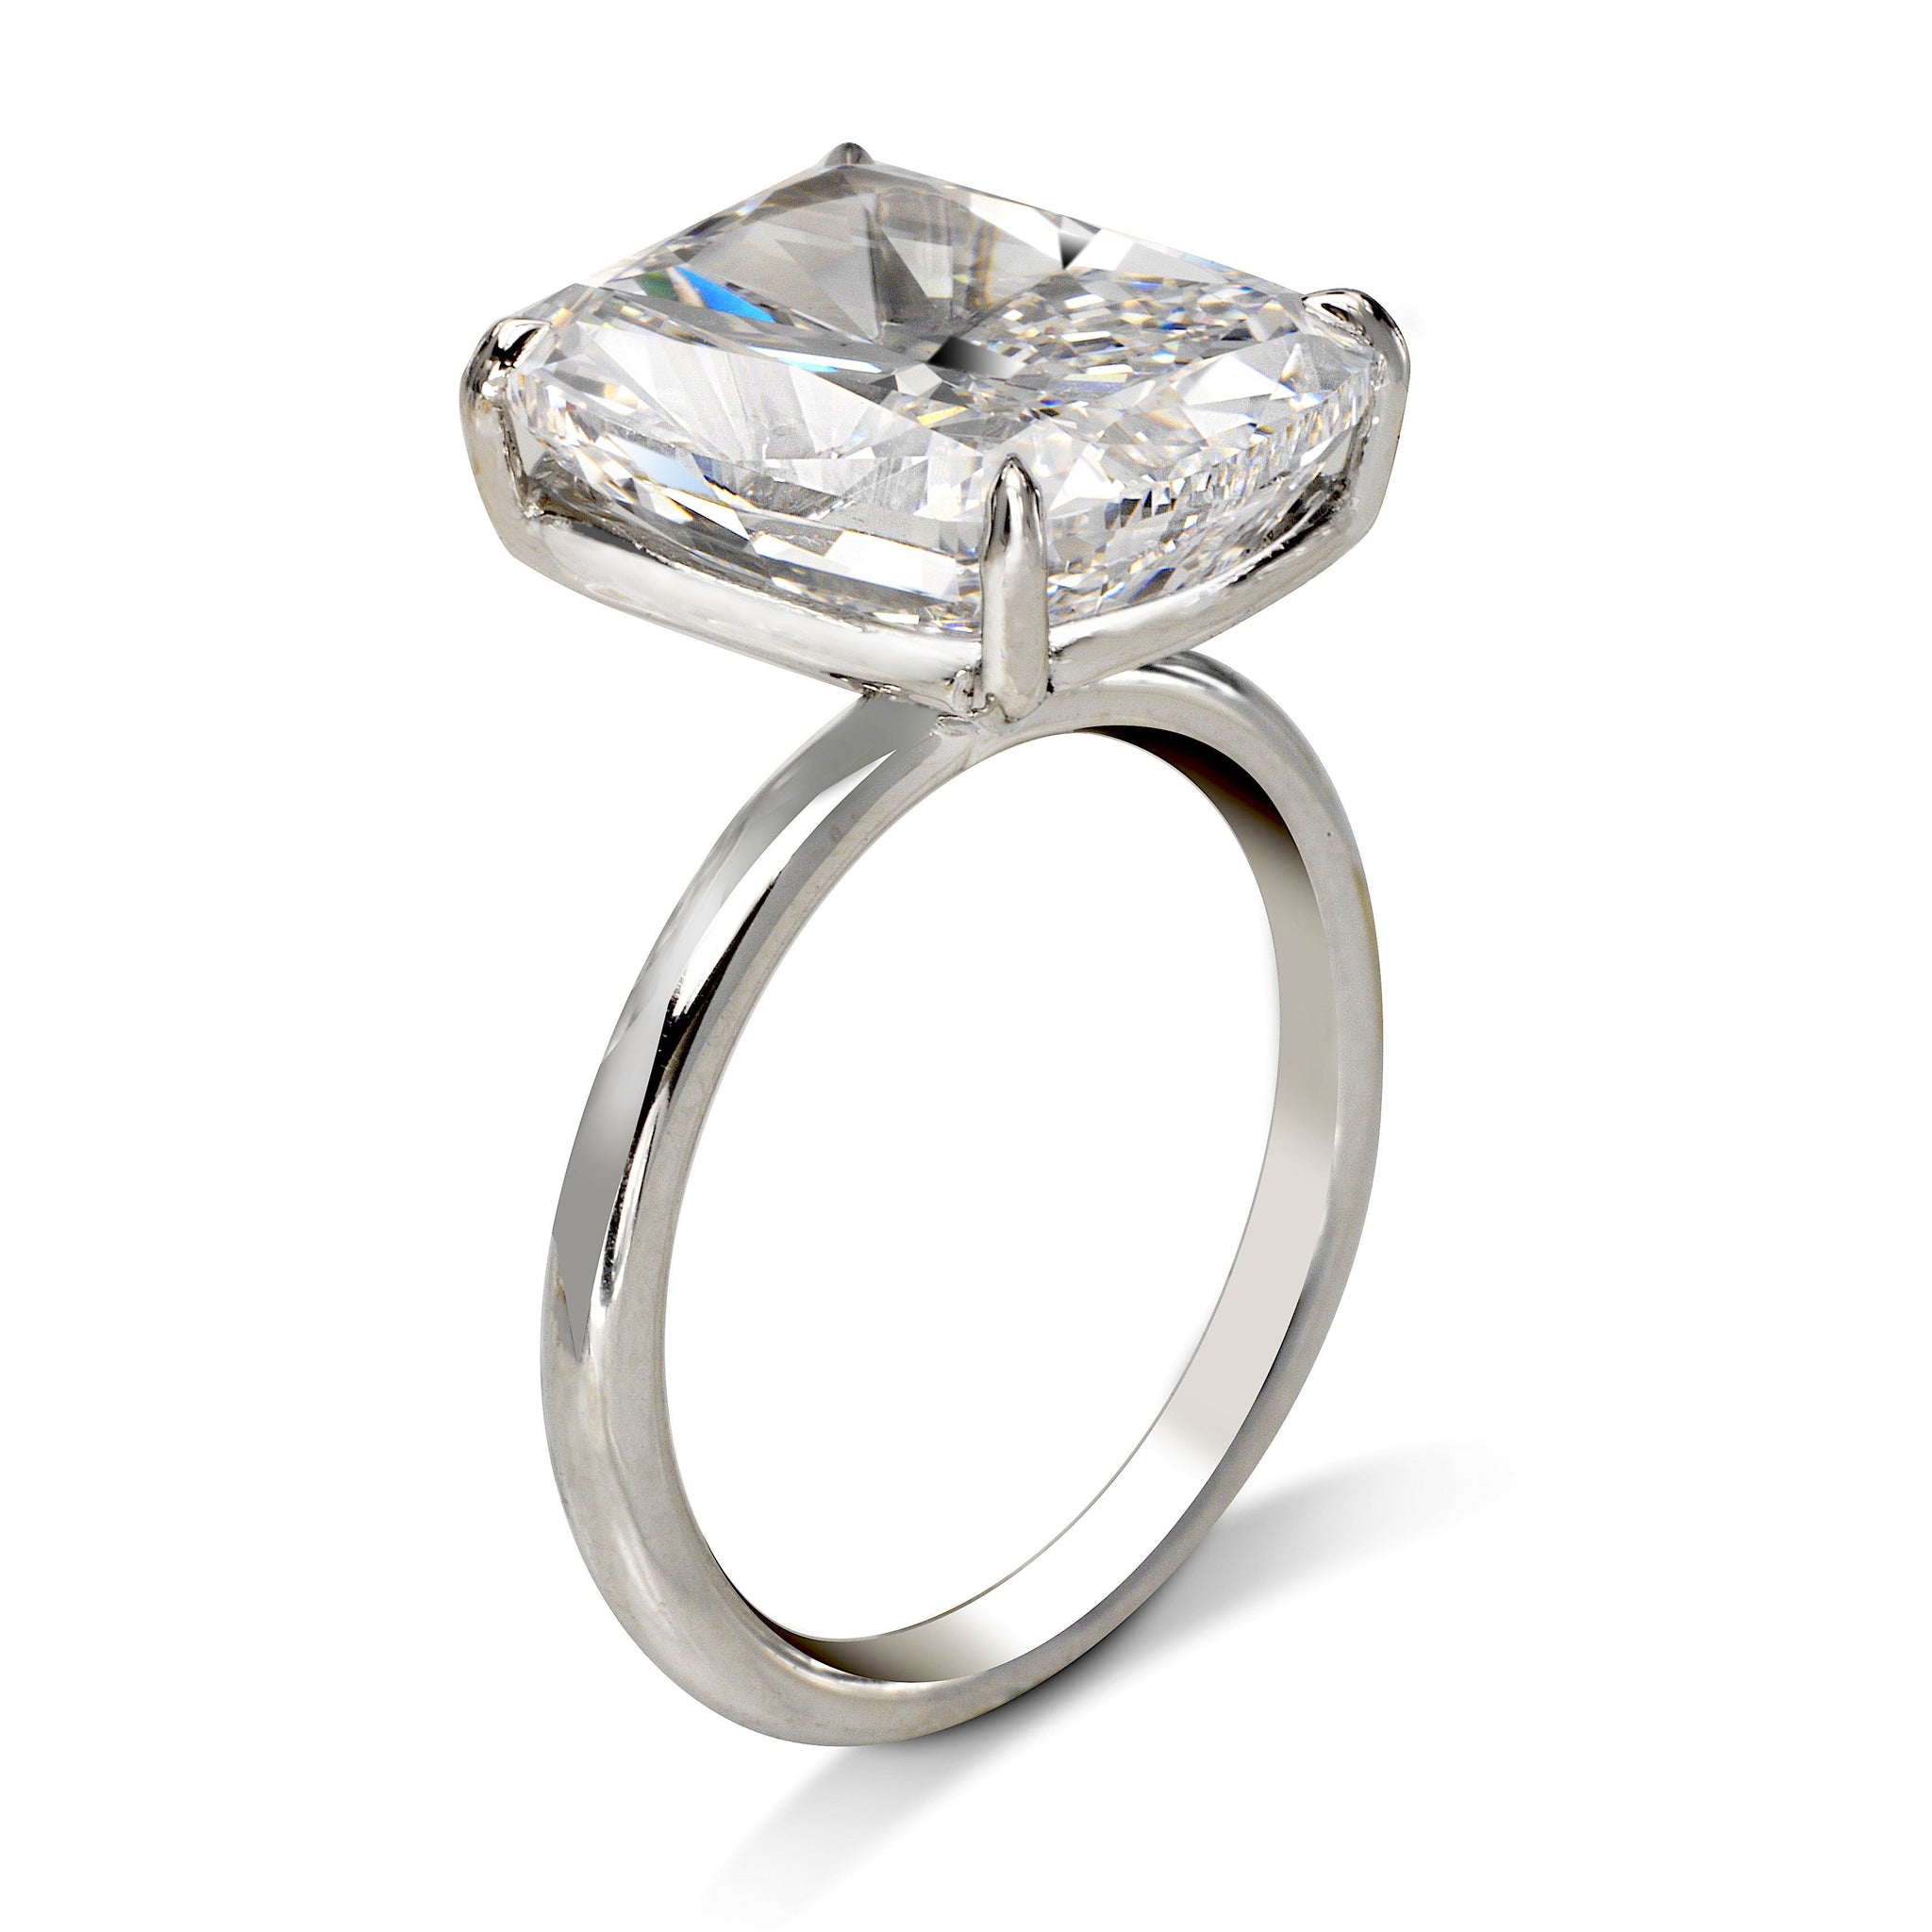 10 Carat Diamond Ring Buying And Price Guide Whiteflash, 59% OFF